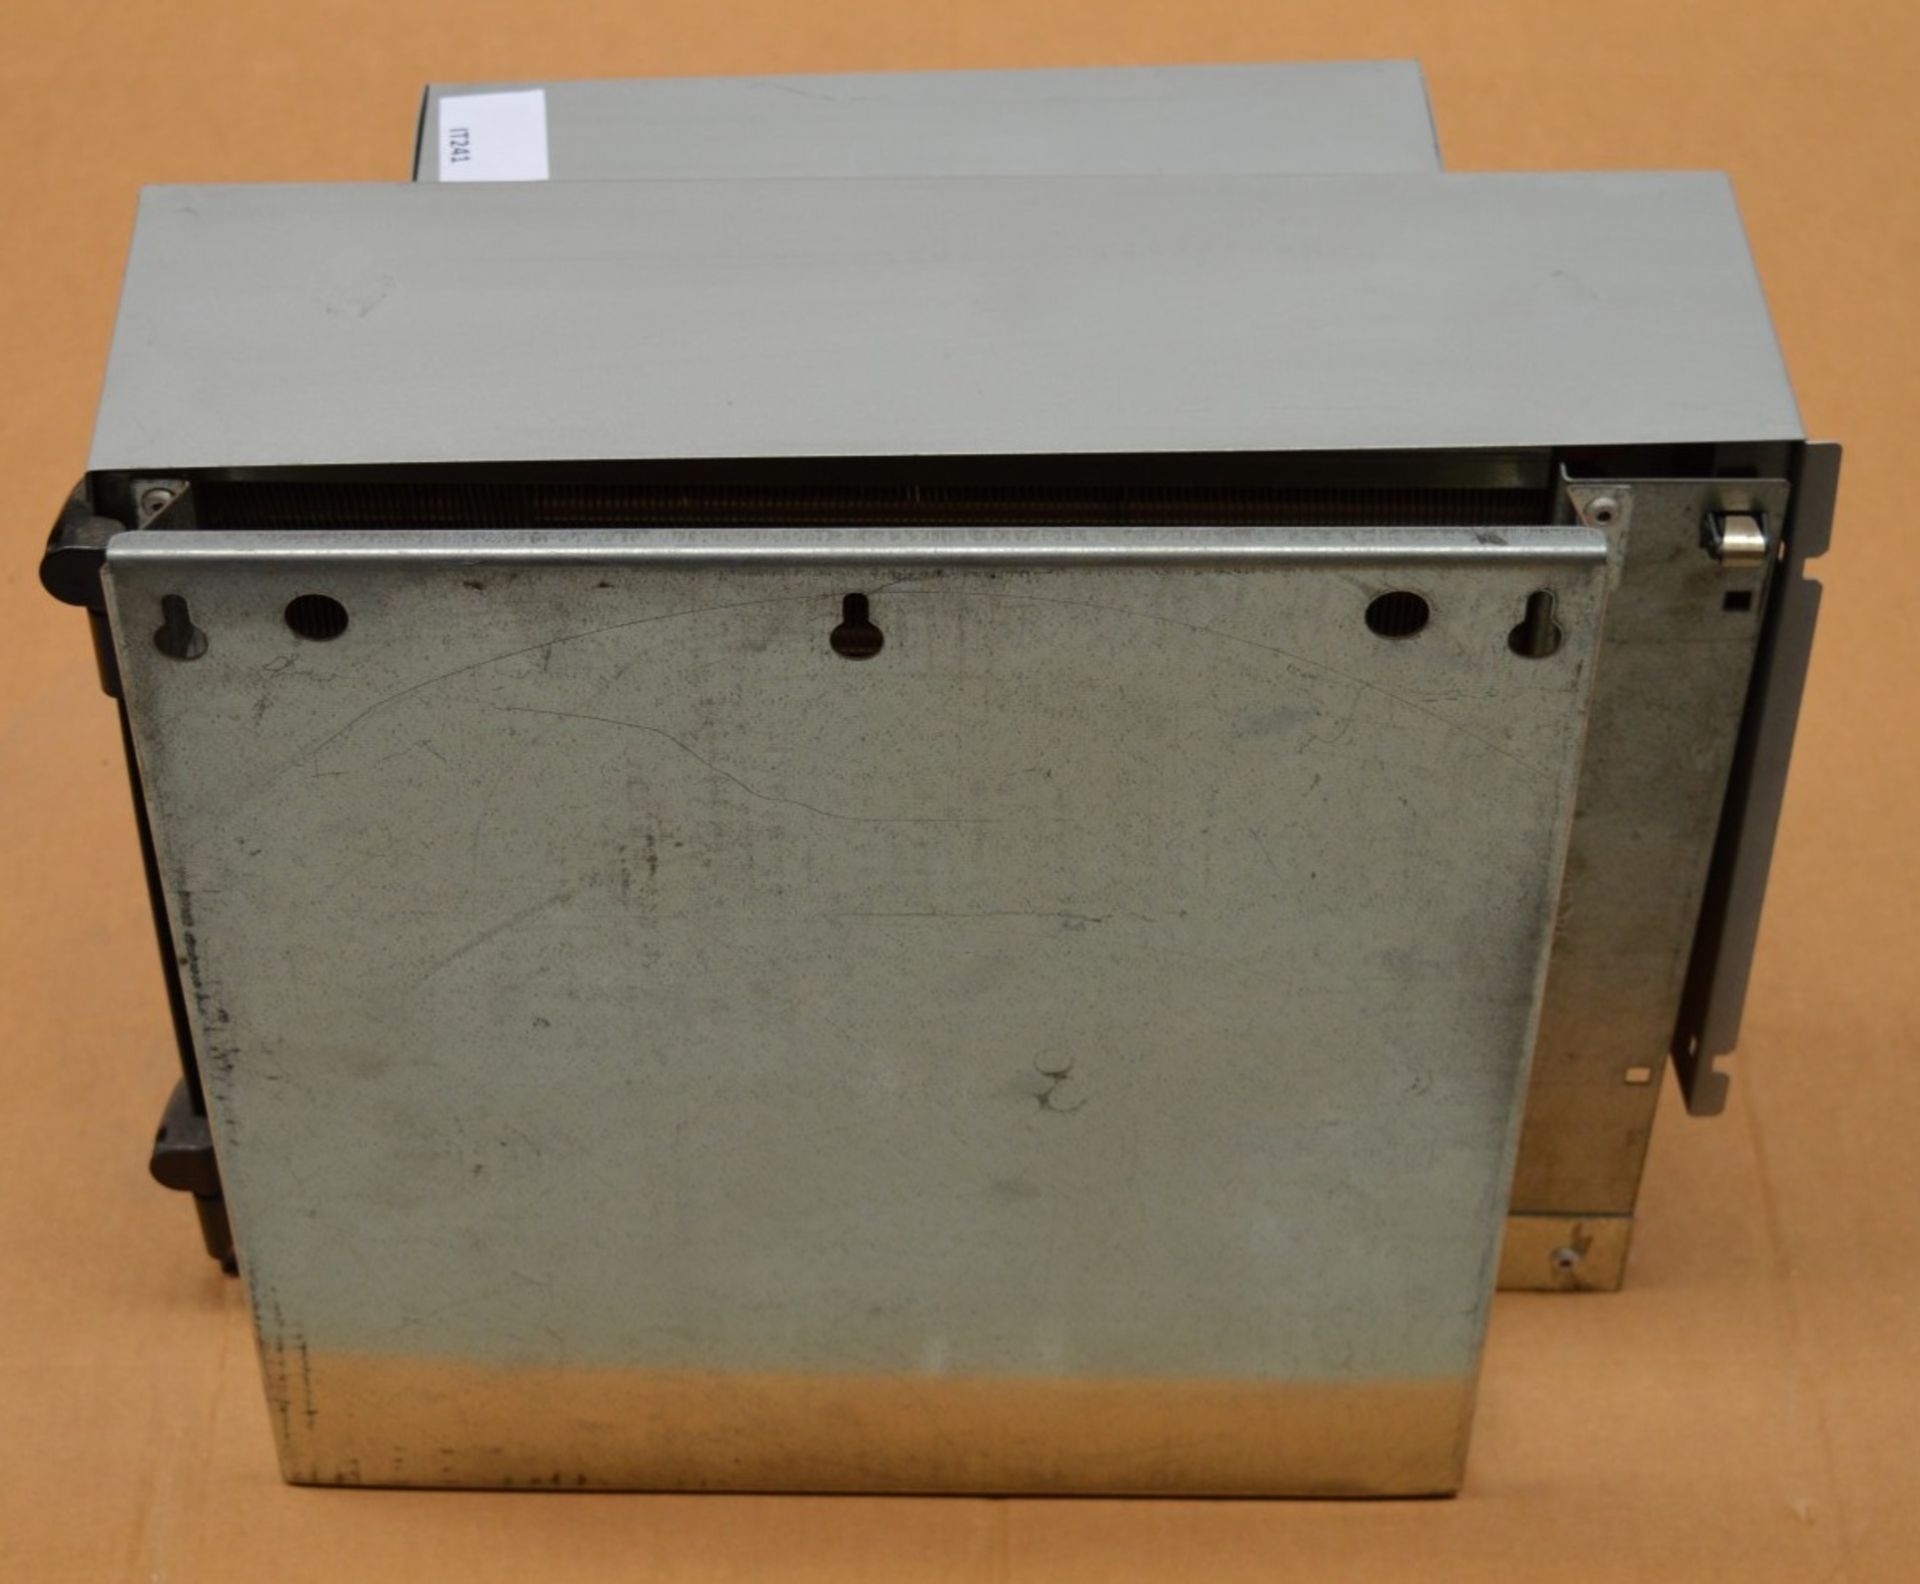 1 x Cornelius Heat Dump Unit For Cooled Split Cooling Systems - Model 061100502H - CL011 - Ref IT241 - Image 6 of 8